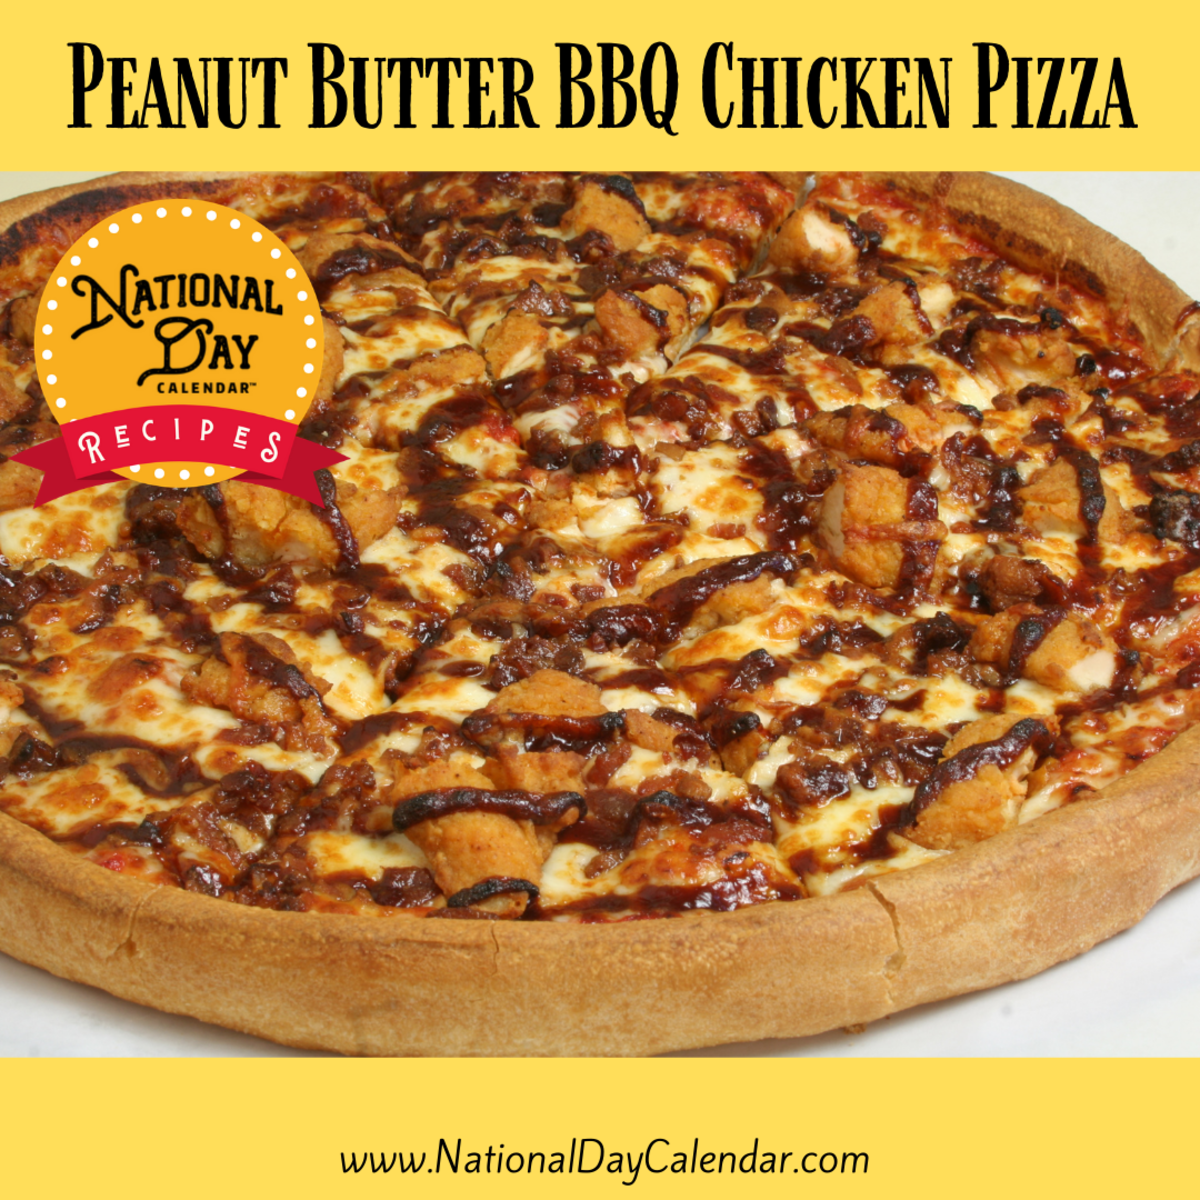 Peanut Butter BBQ Chicken Pizza recipe